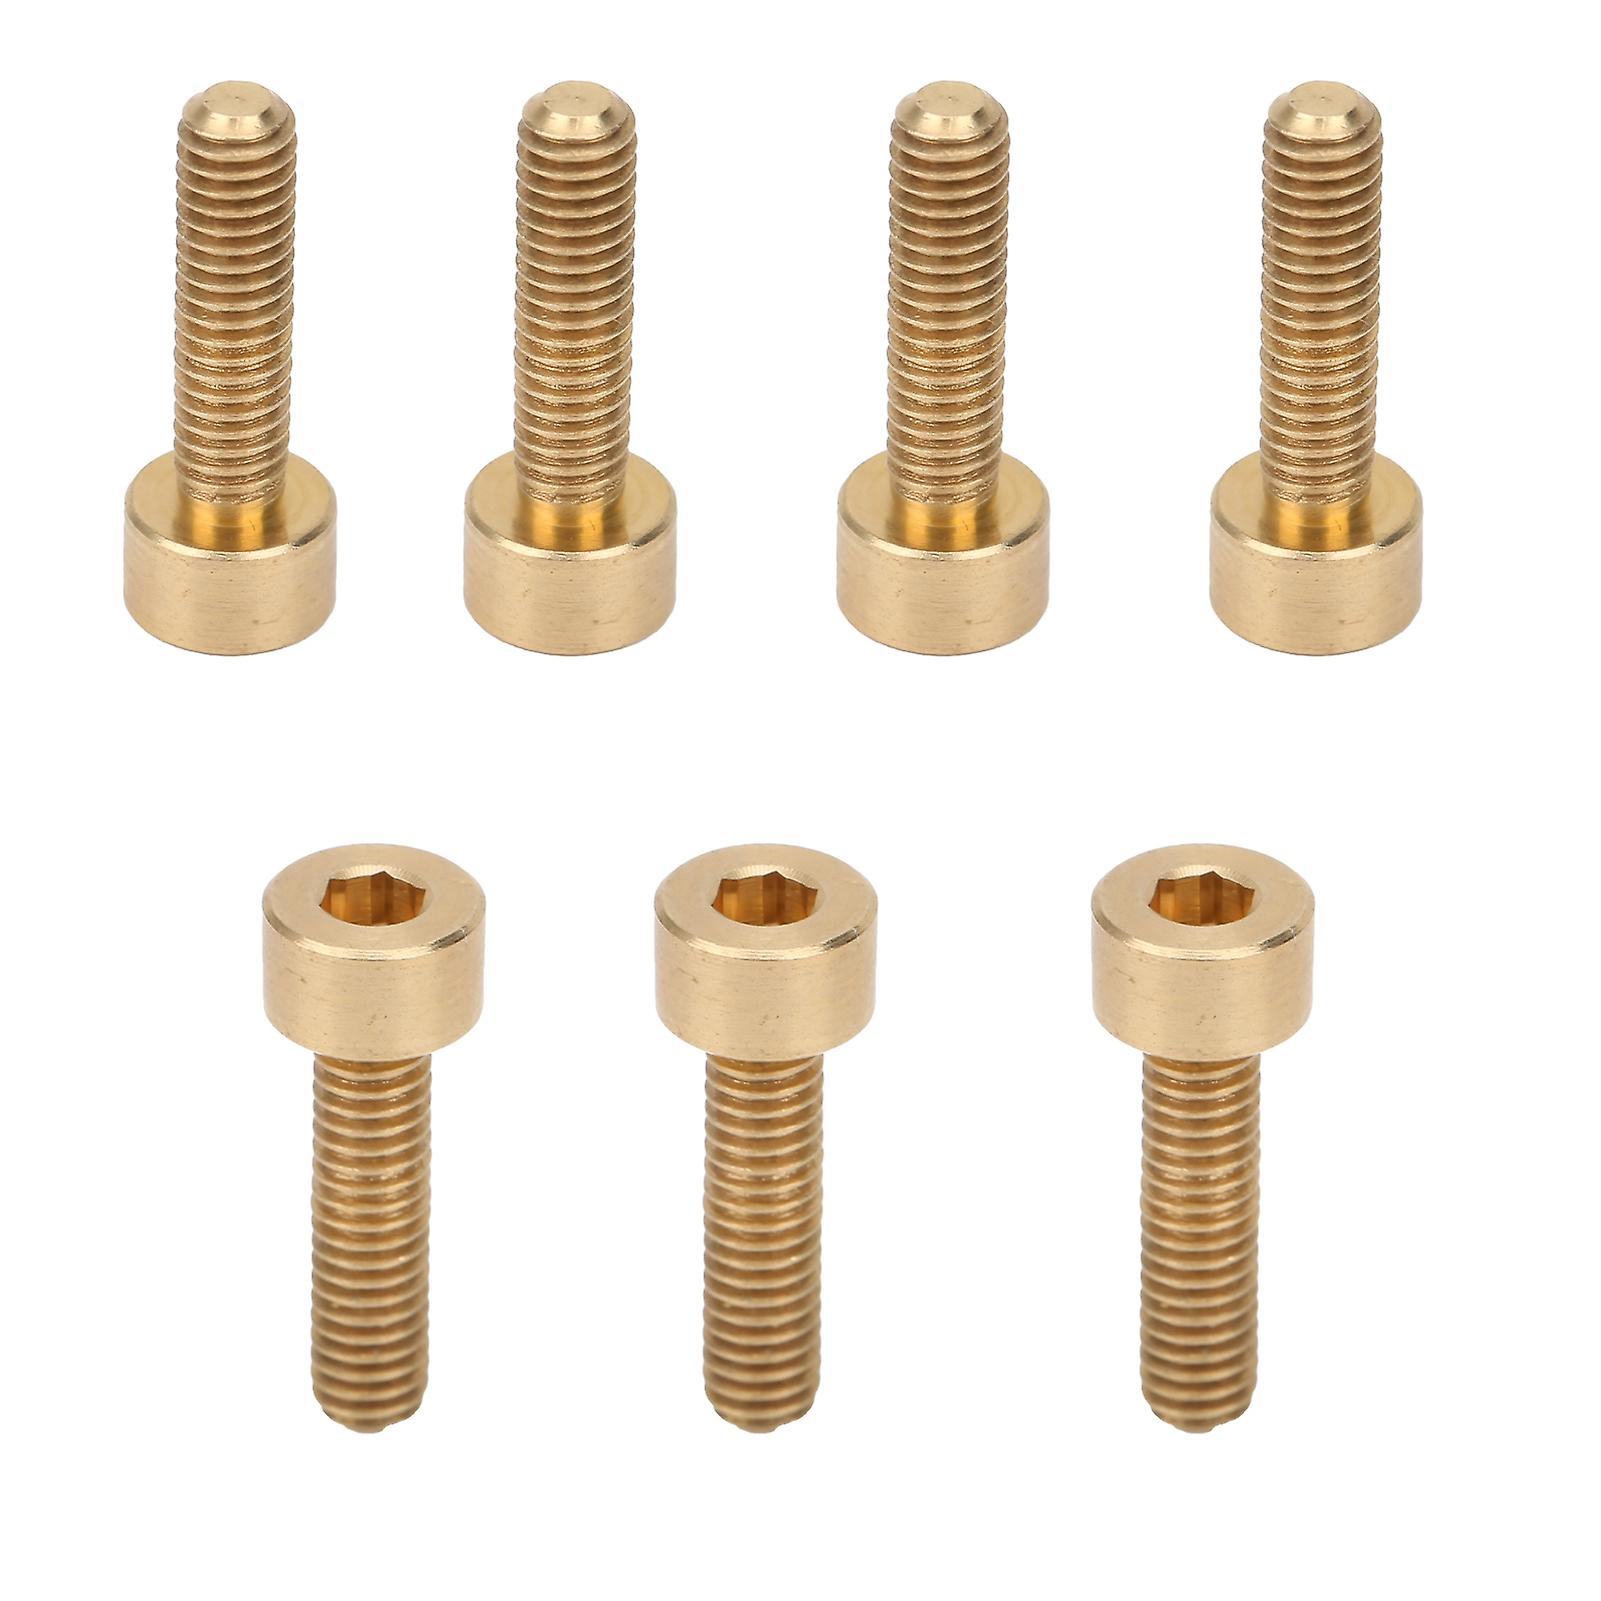 50pcs Cap Hex Socket Screw Copper Fastener Hardware Tools Industrial Supplies M4m4x15